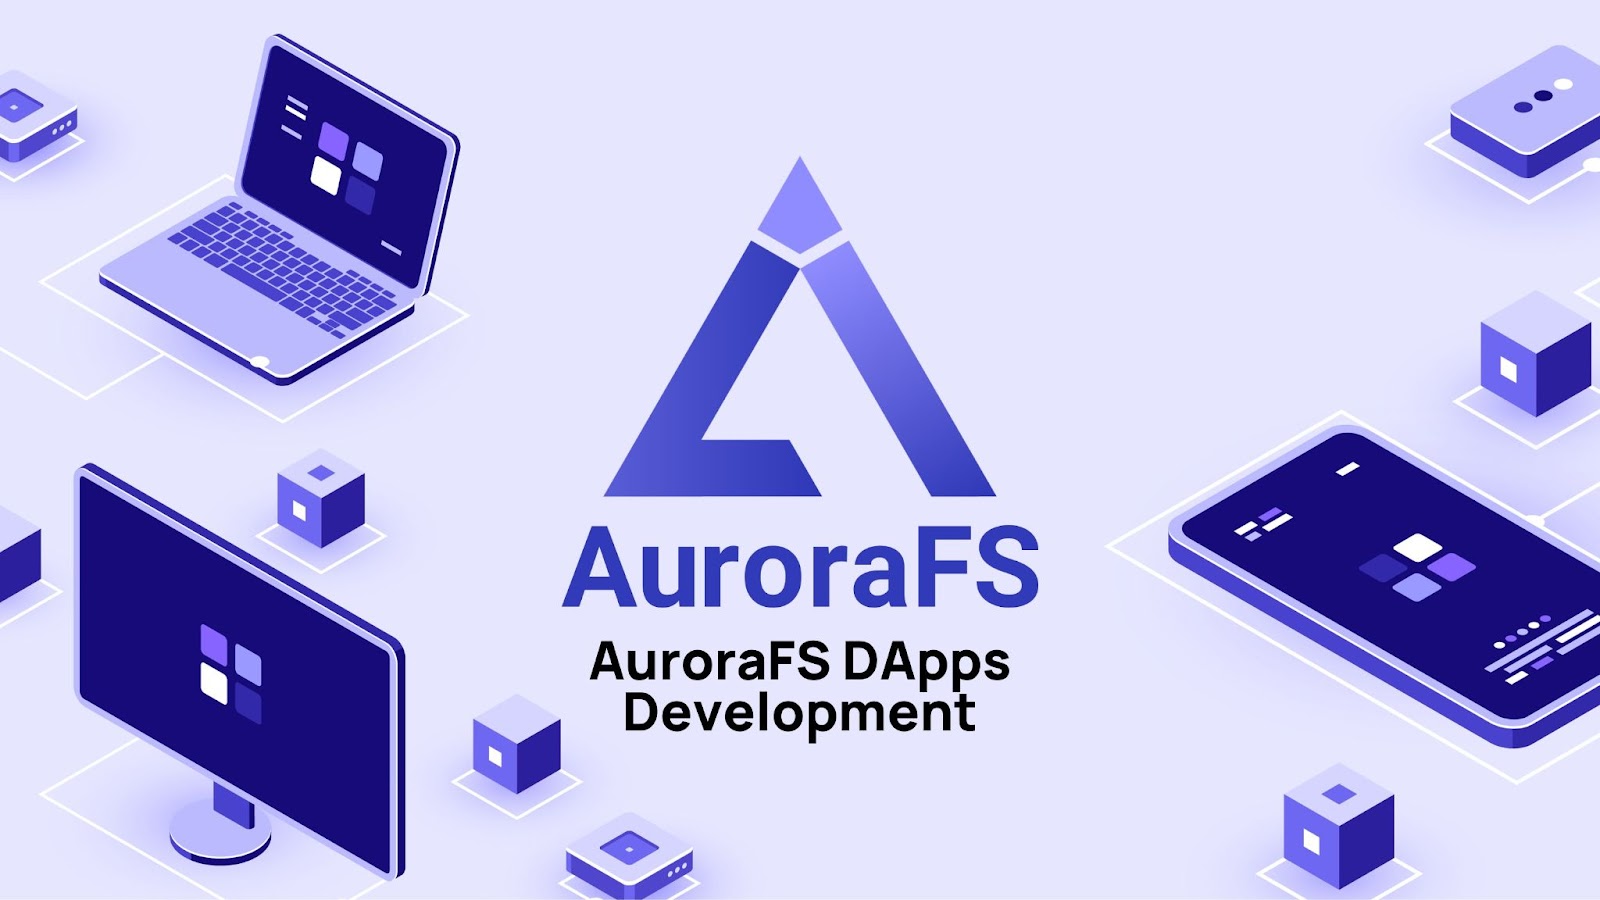 AuroraFS DApps Development Capabilities to Be Enhanced – Press release Bitcoin News